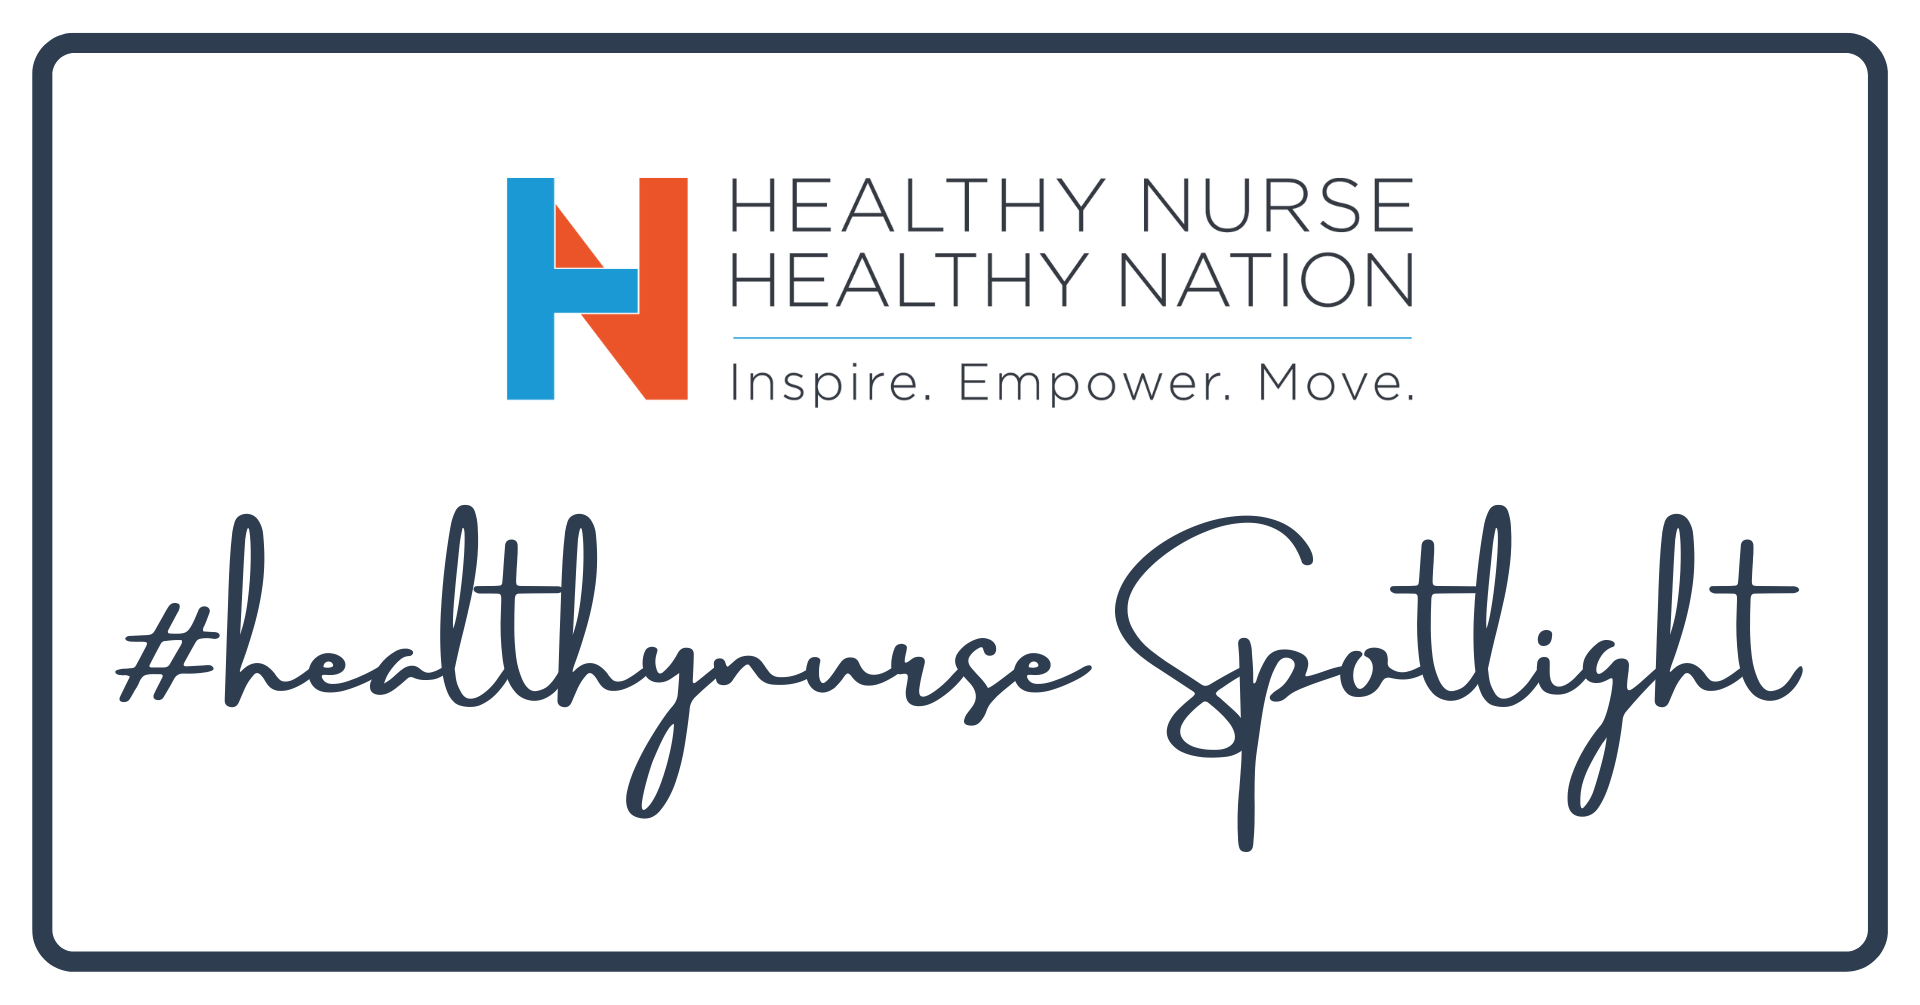 Healthy Nurse, Healthy Nation™ - #healthynurse Spotlight Series - Pamela Mulligan BSN, RN, NBC-HWC 4102